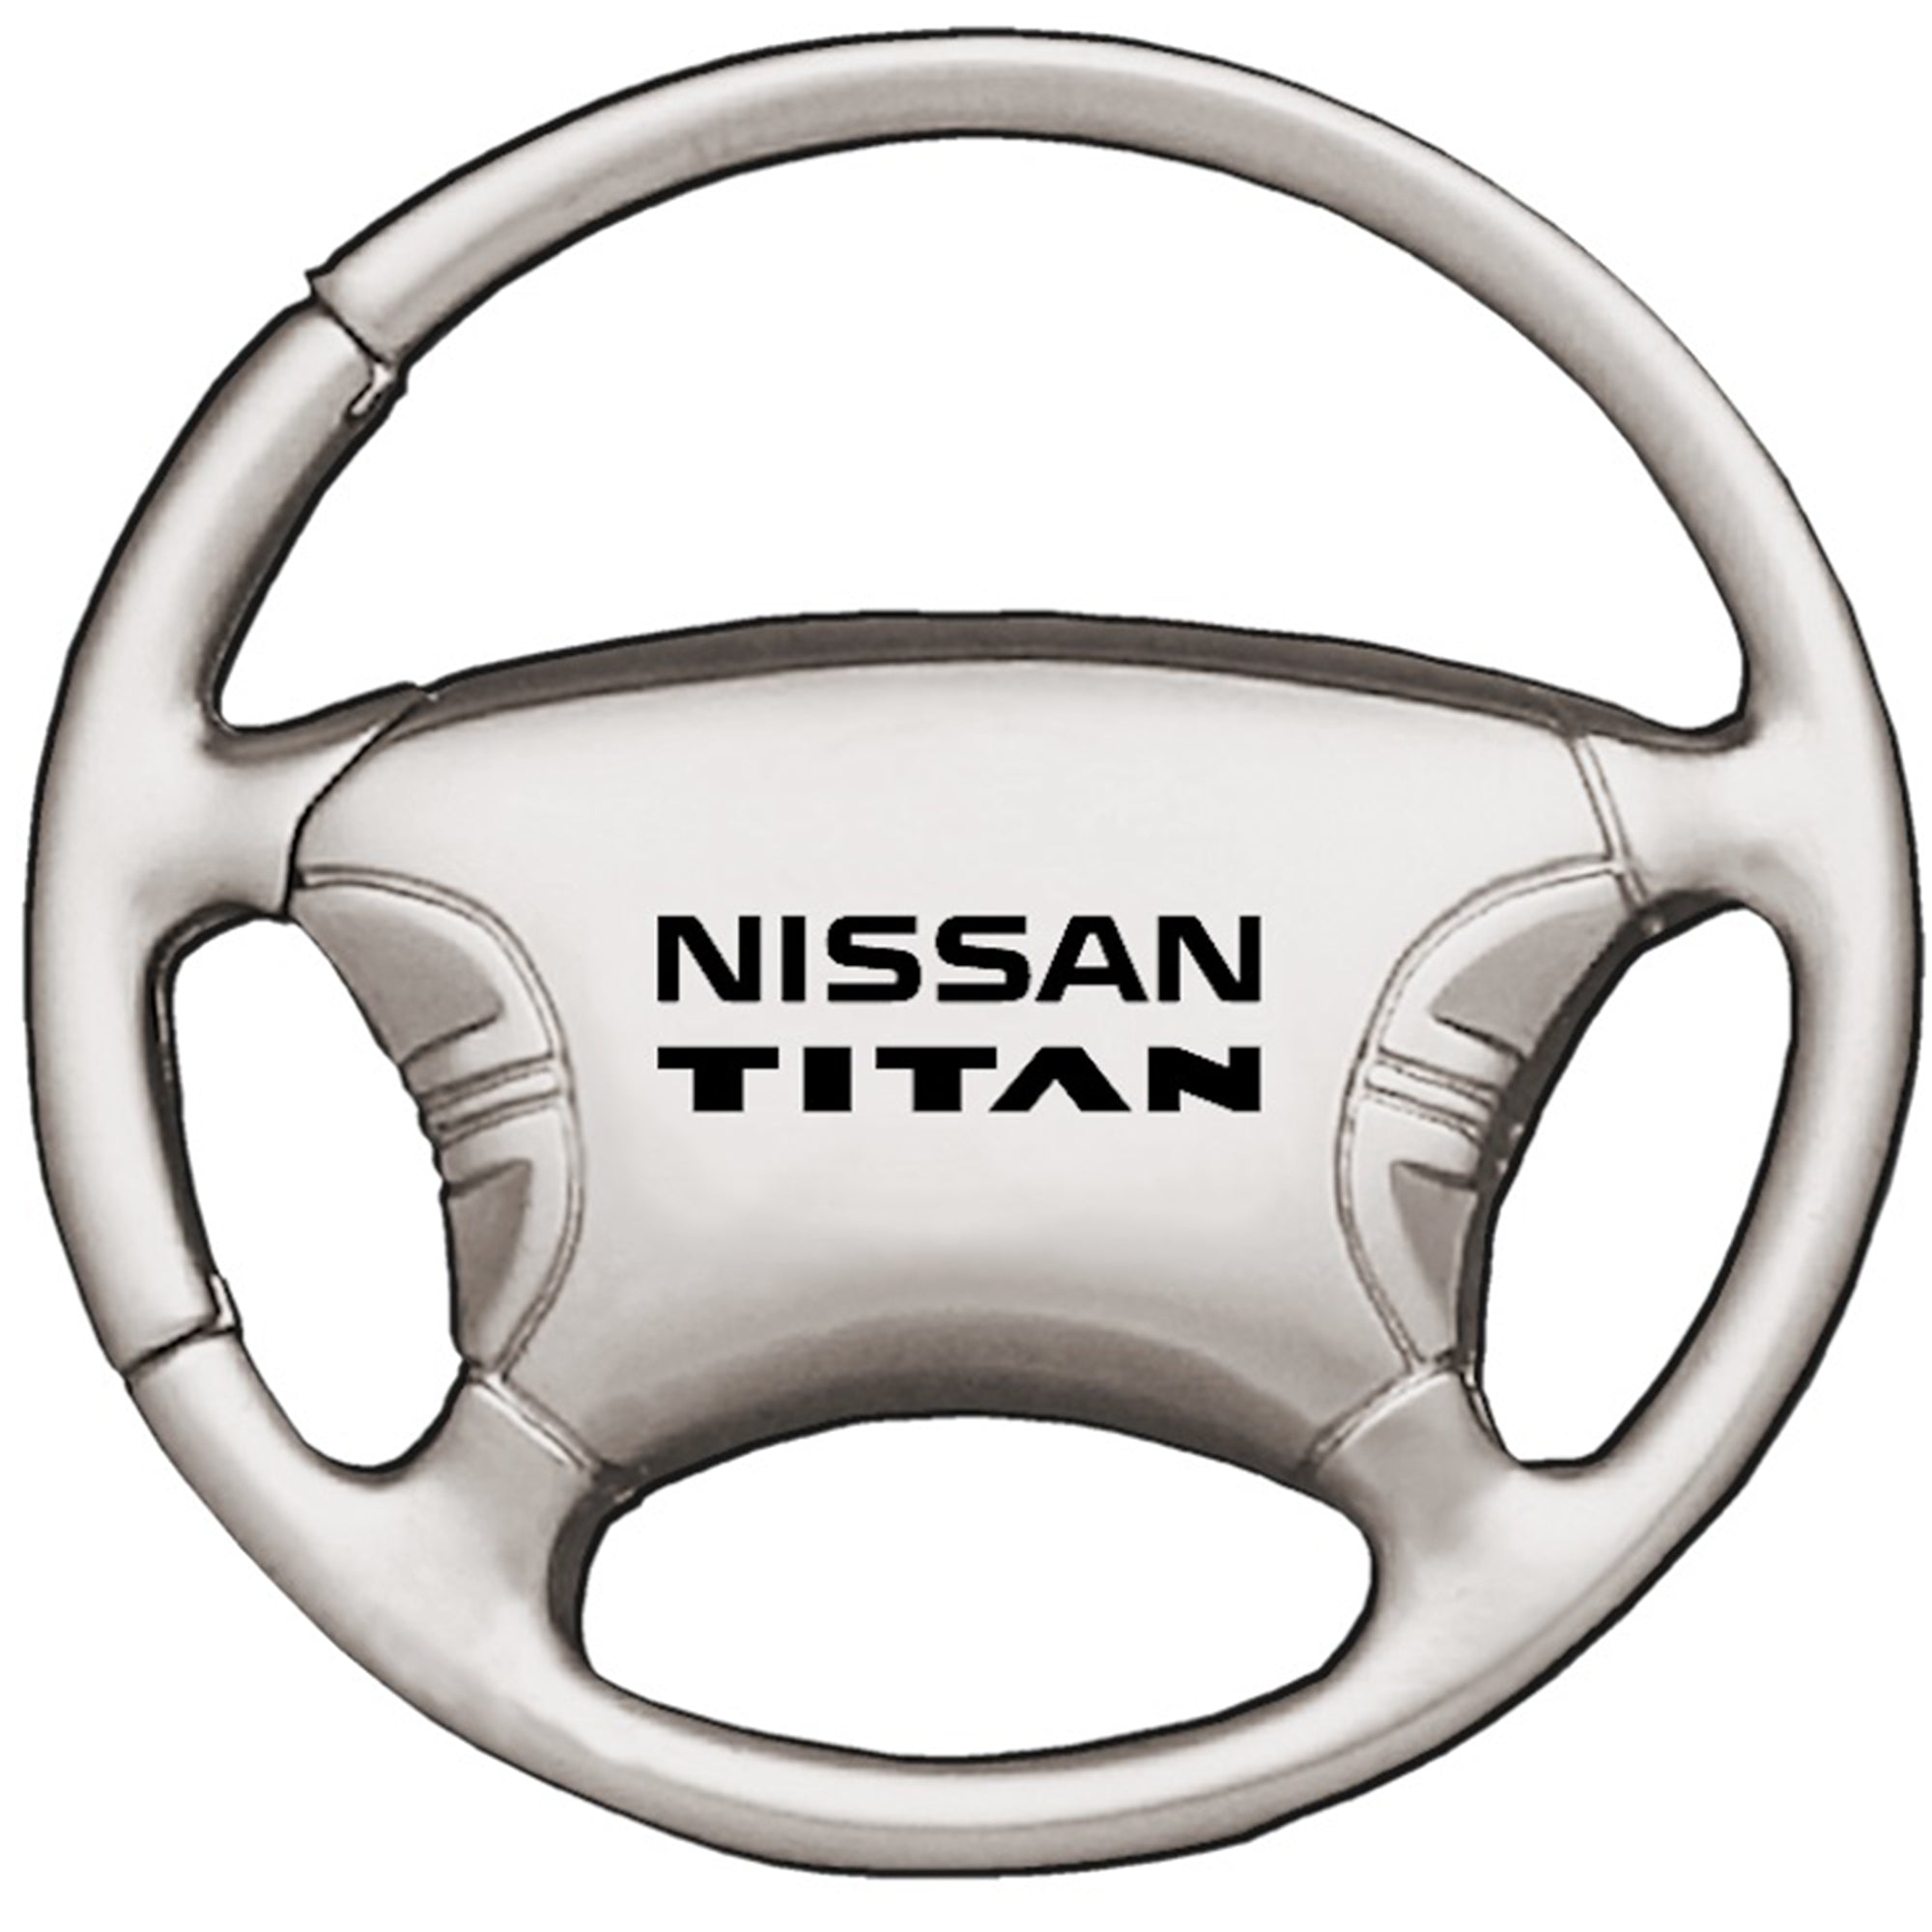 Nissan,Titan,Key Chain